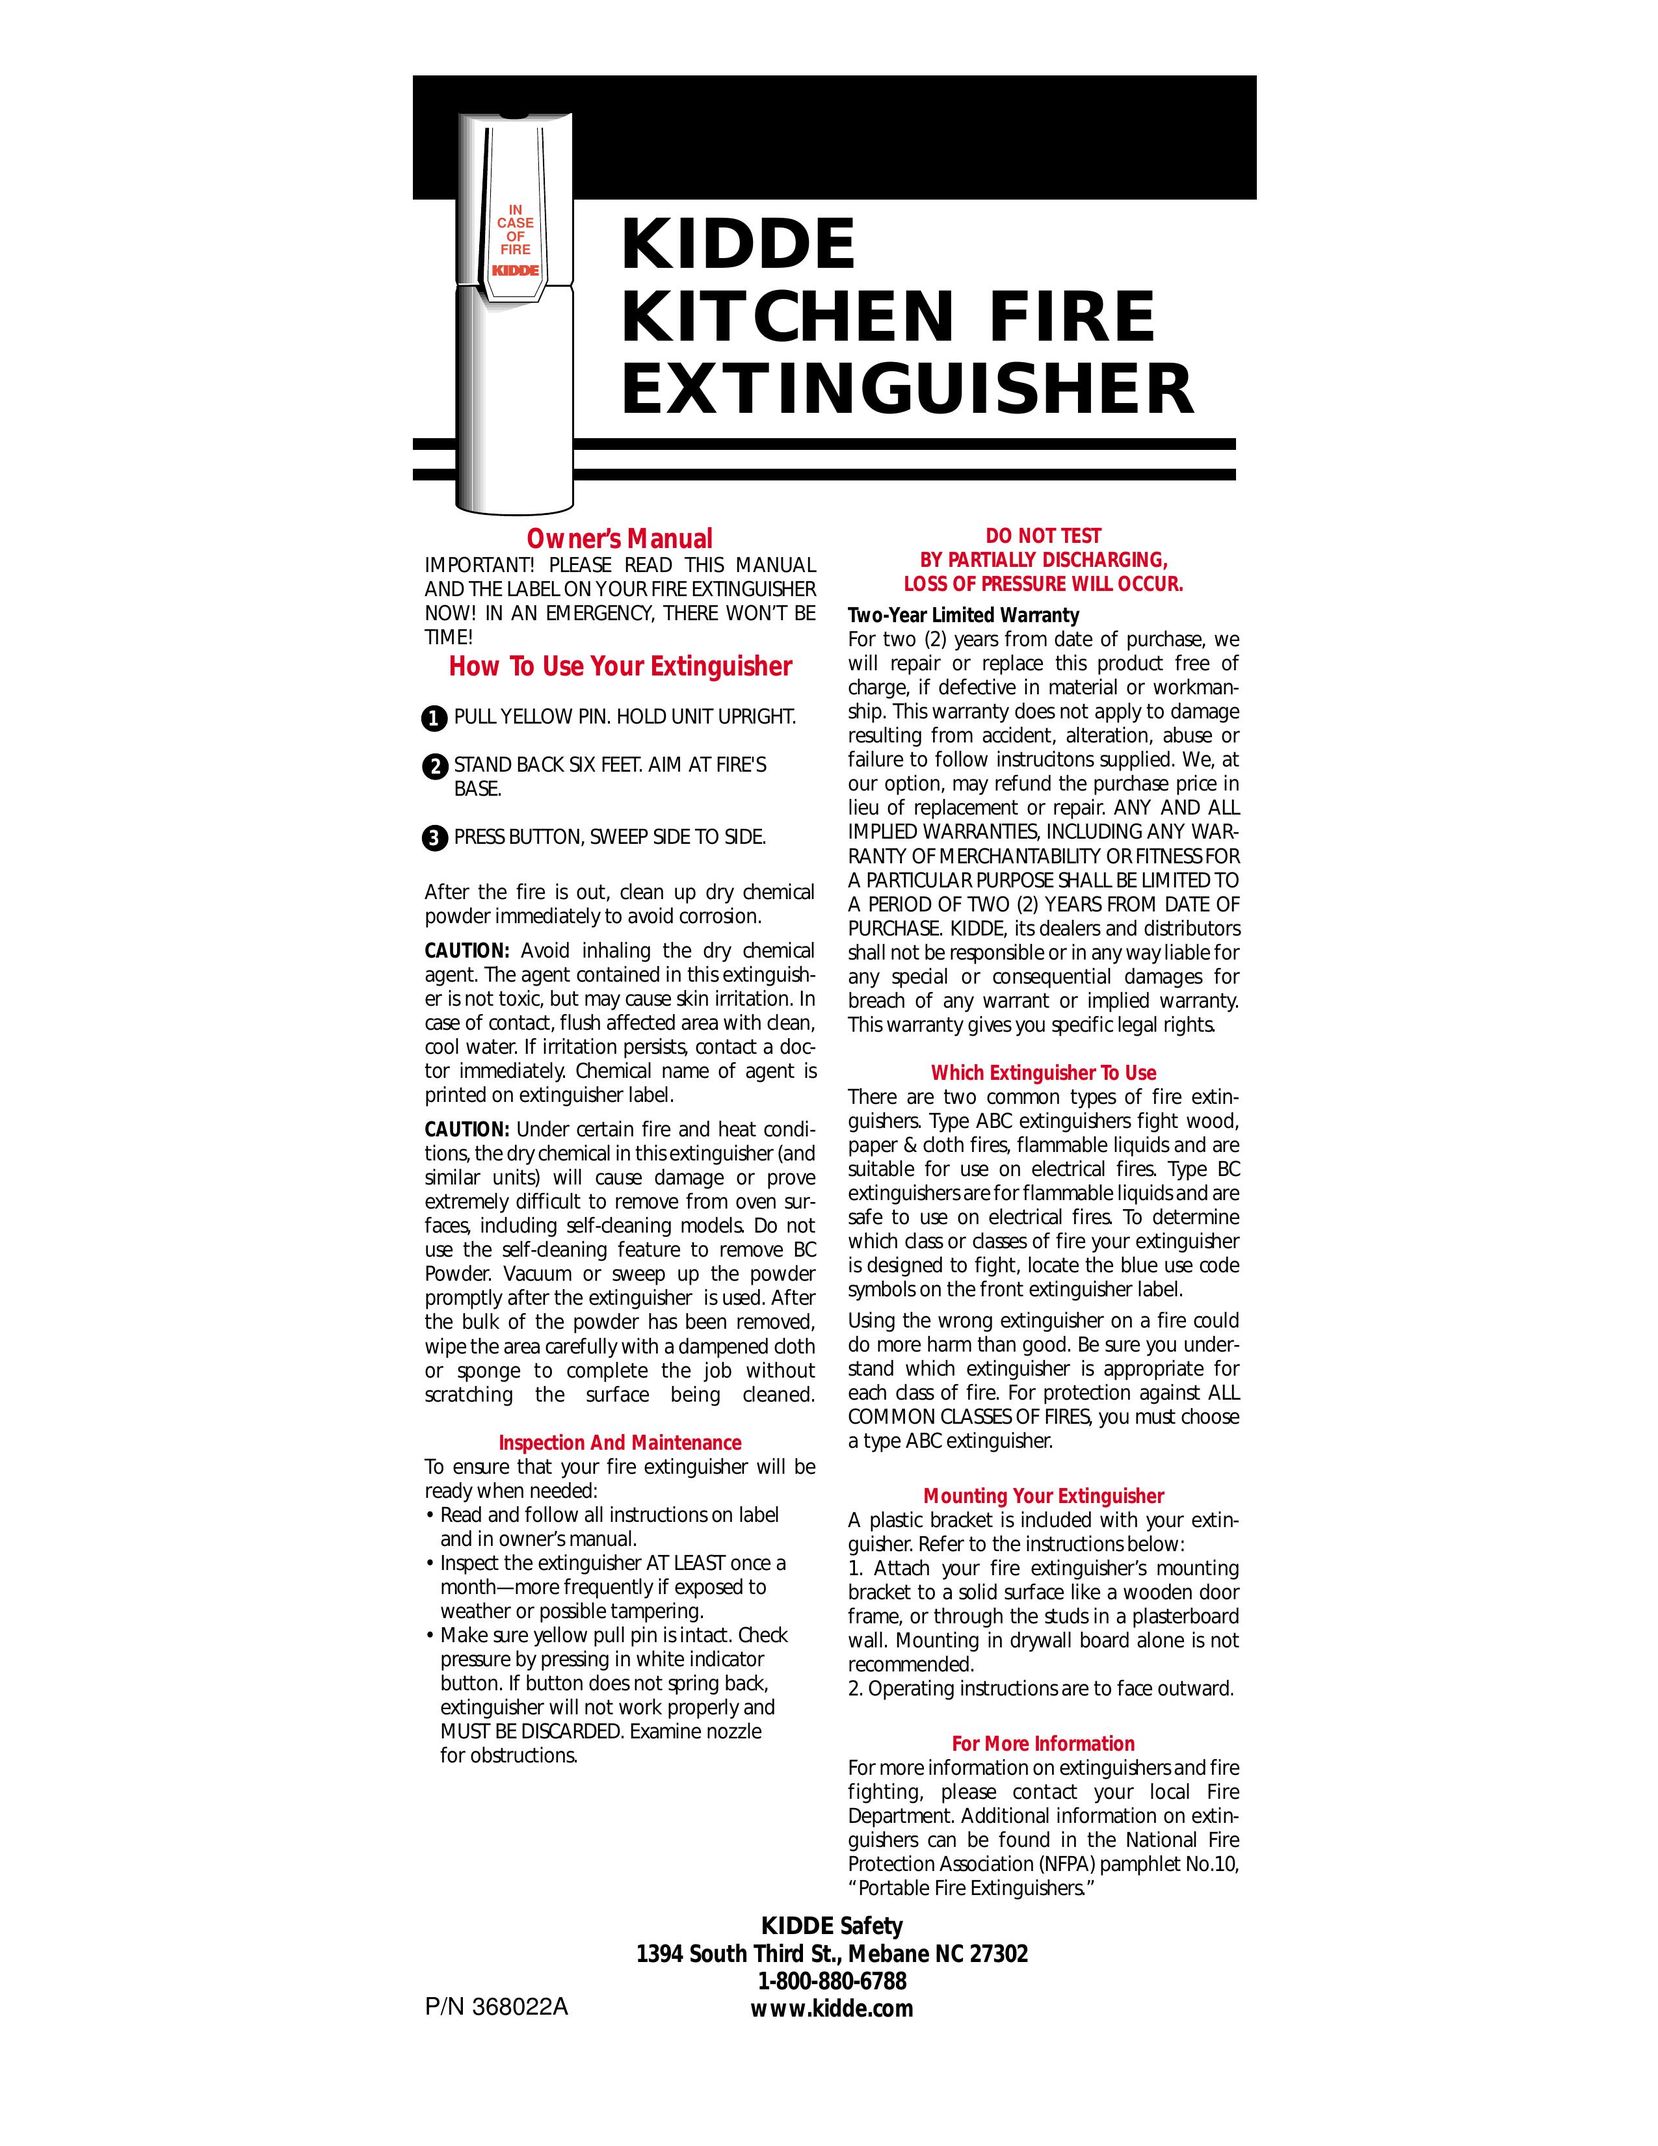 Kidde KITCHEN FIRE EXTINGUISHER Fire Extinguisher User Manual